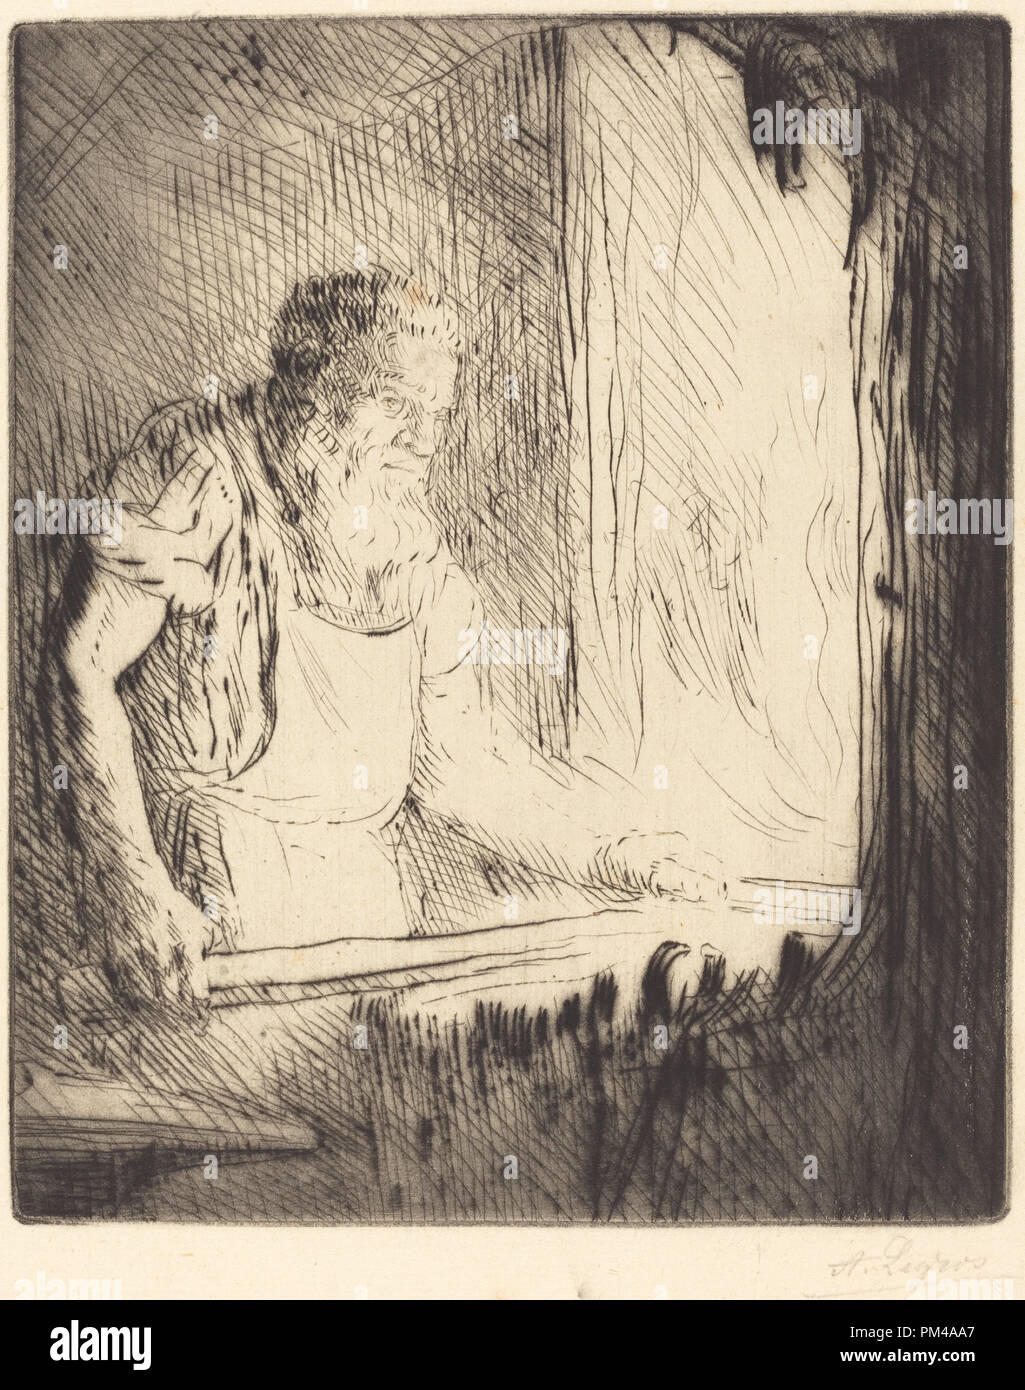 Blacksmith (Le forgeron). Medium: drypoint and etching. Museum: National Gallery of Art, Washington DC. Author: Alphonse Legros. Stock Photo